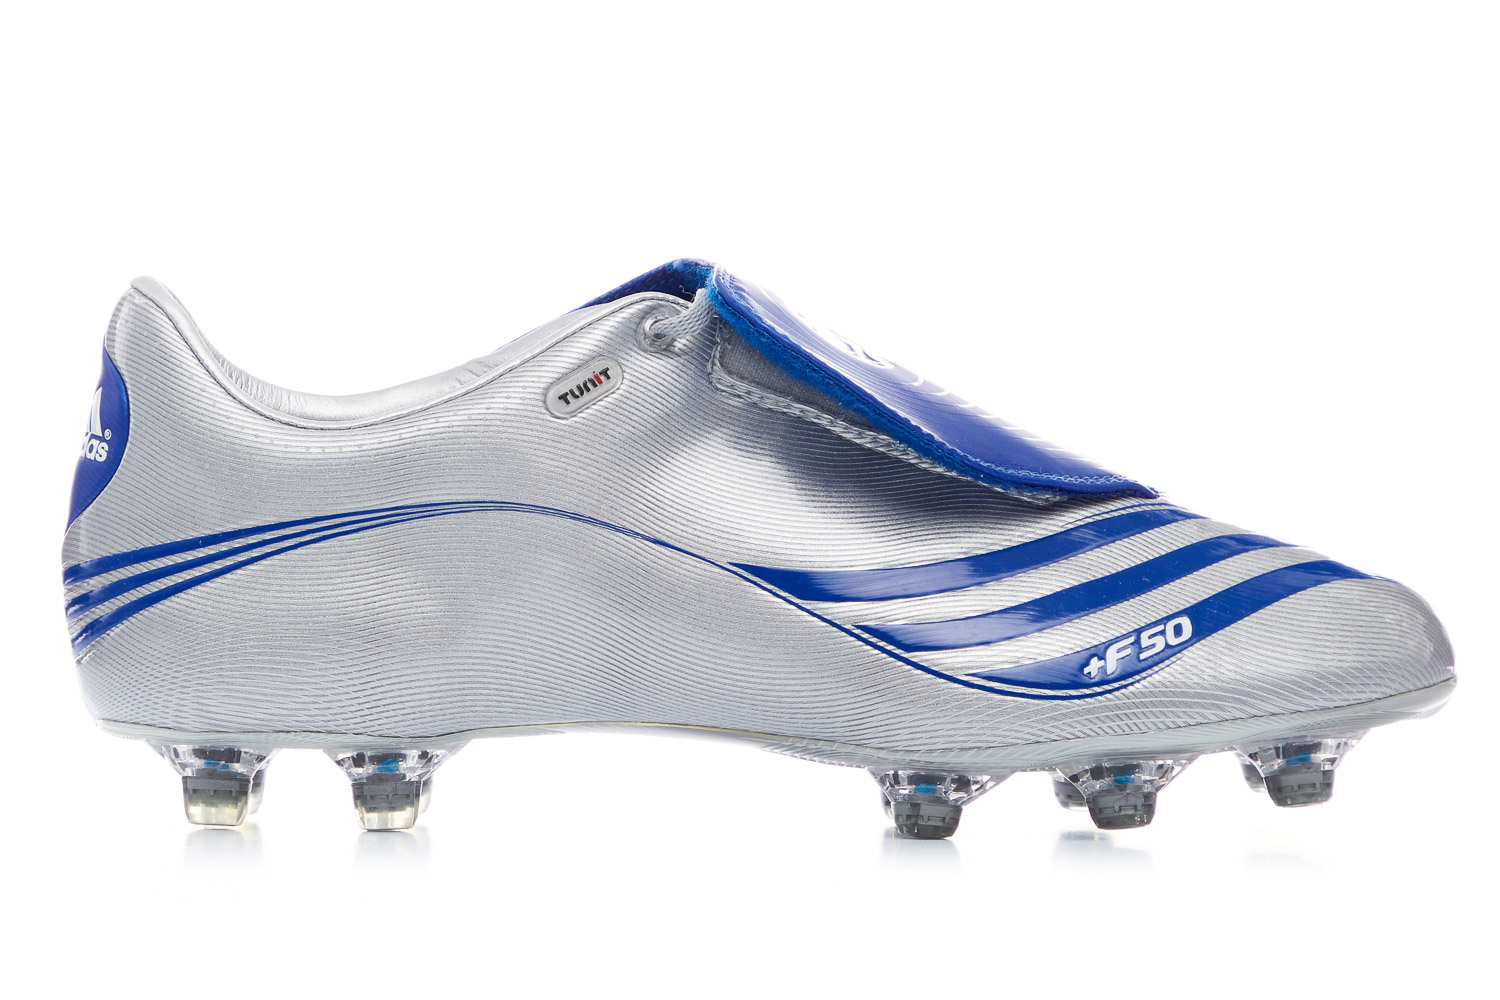 2007 adidas +F50.7 Tunit Football Boots *In Box* FG